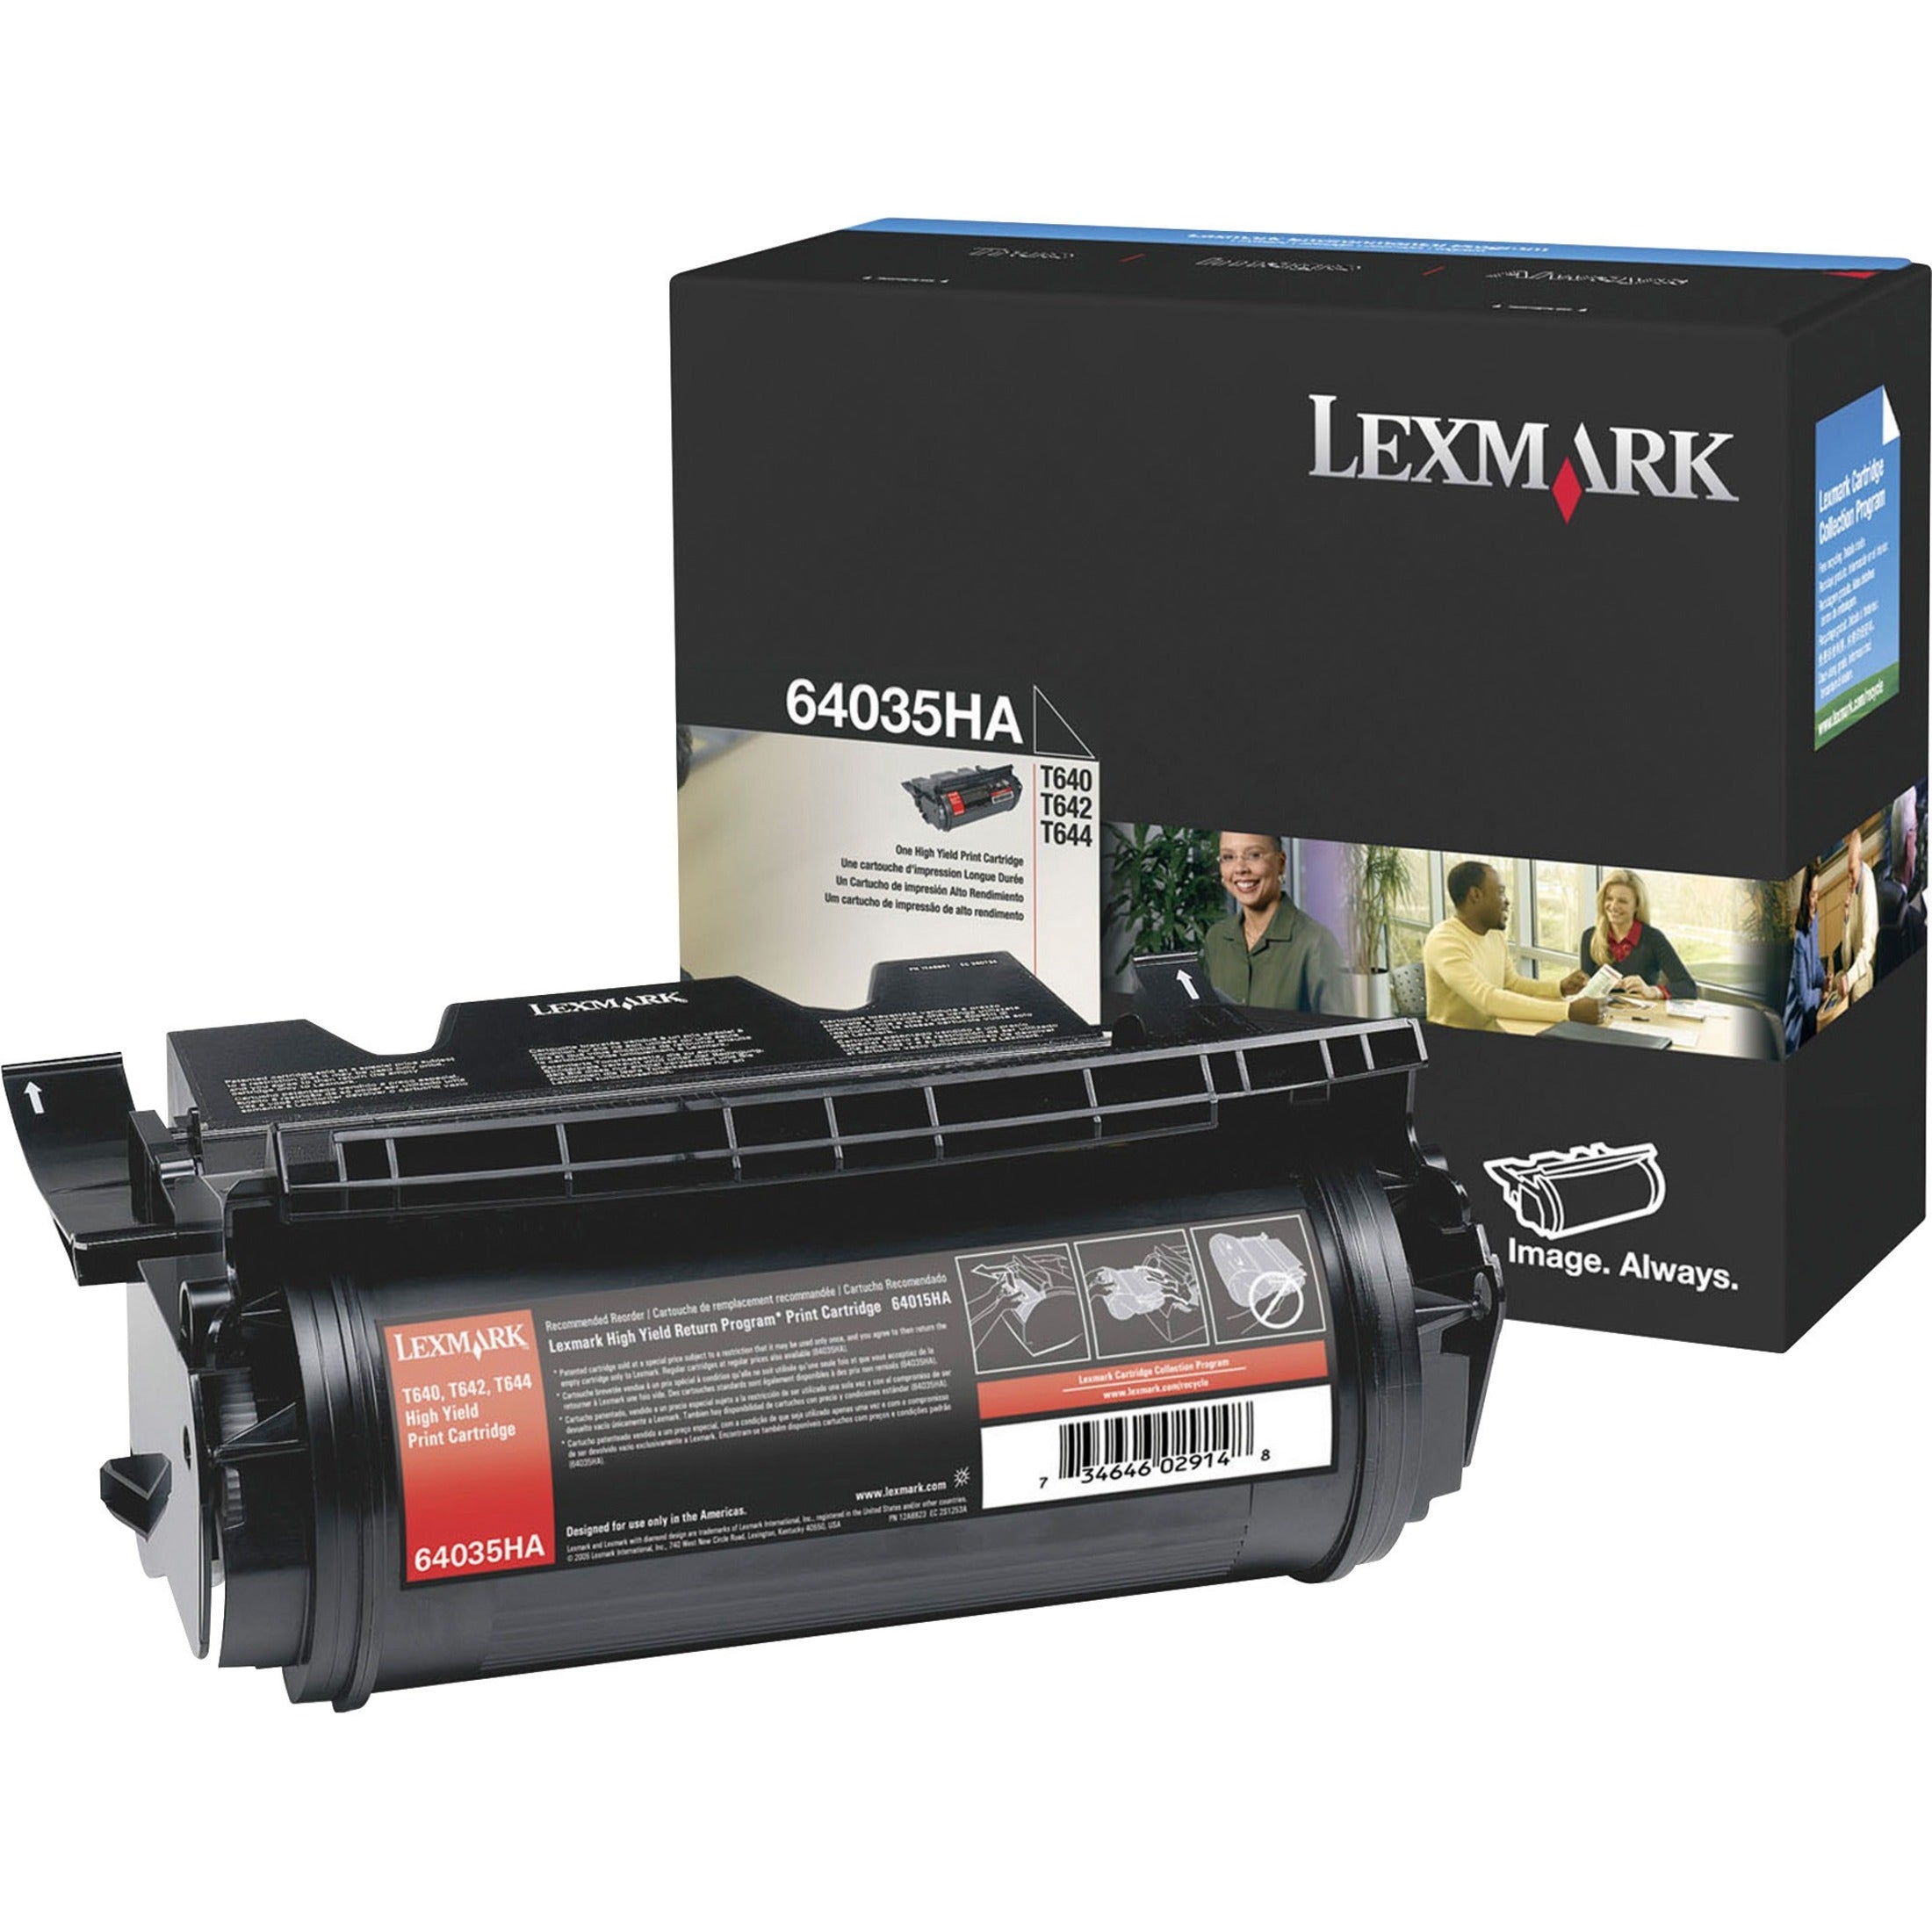 Lexmark 64035HA Original Toner Cartridge, Black, 21,000 Pages